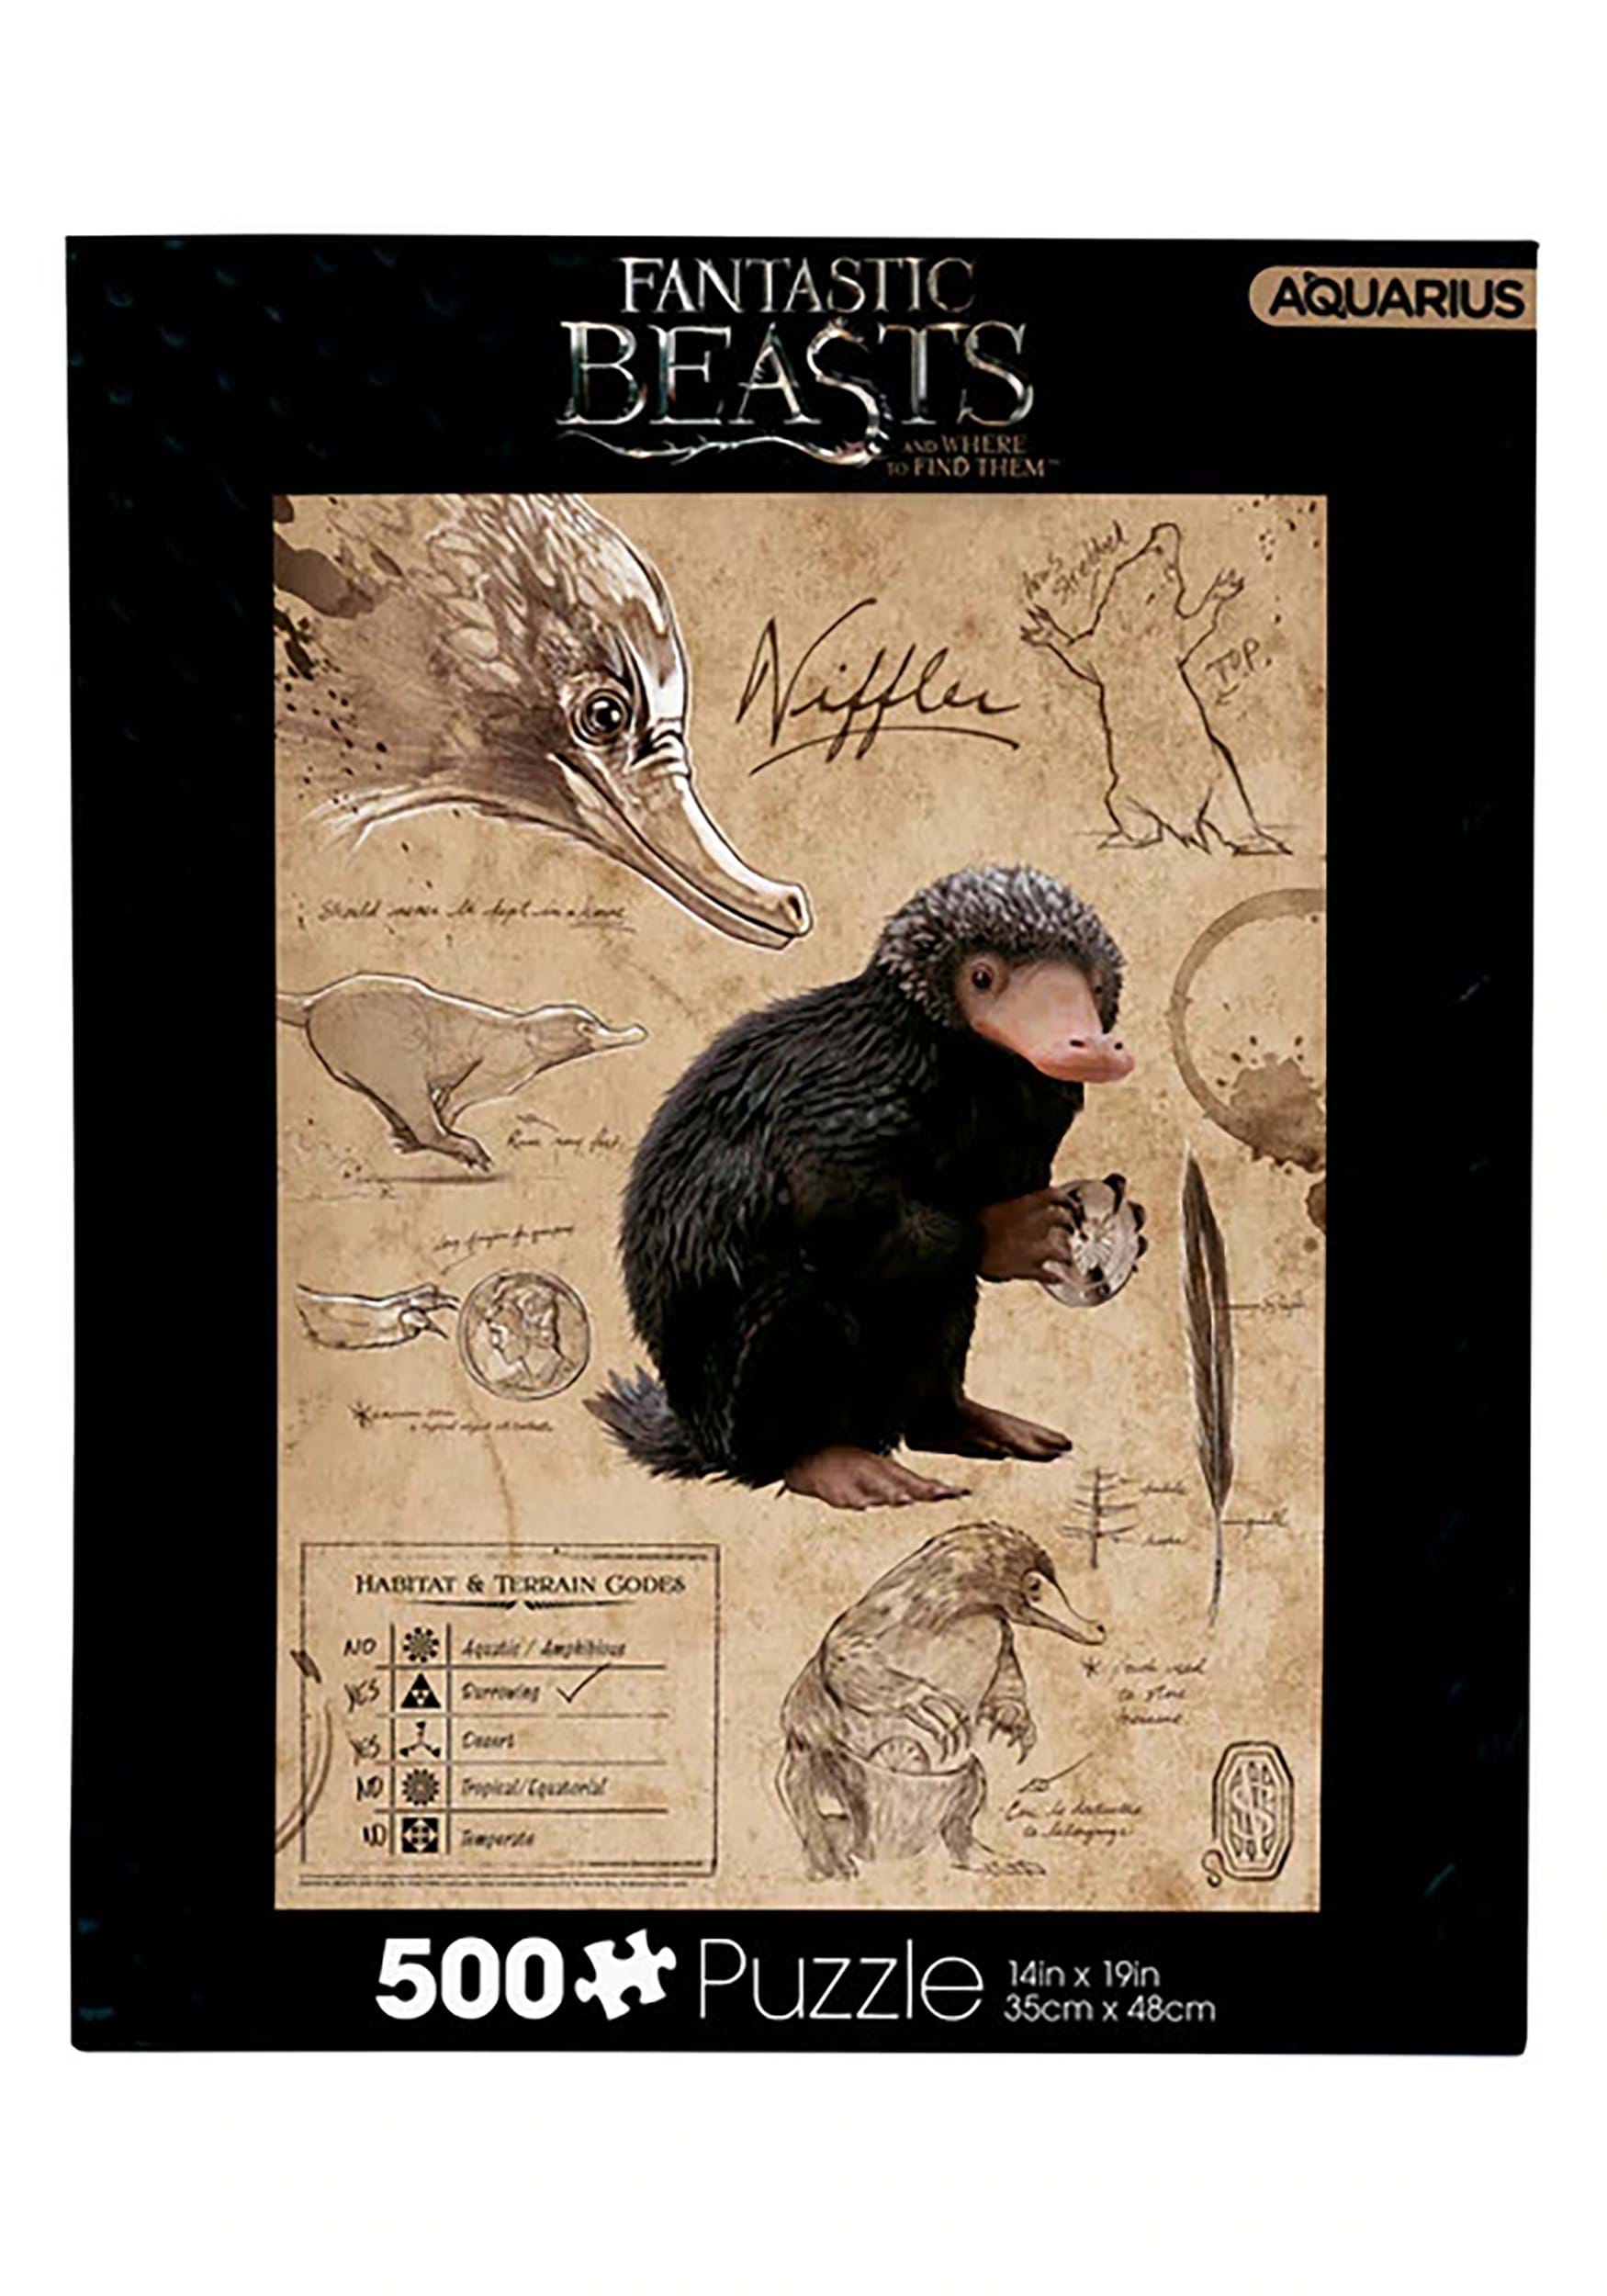 500 pc Fantastic Beasts- Niffler Puzzle